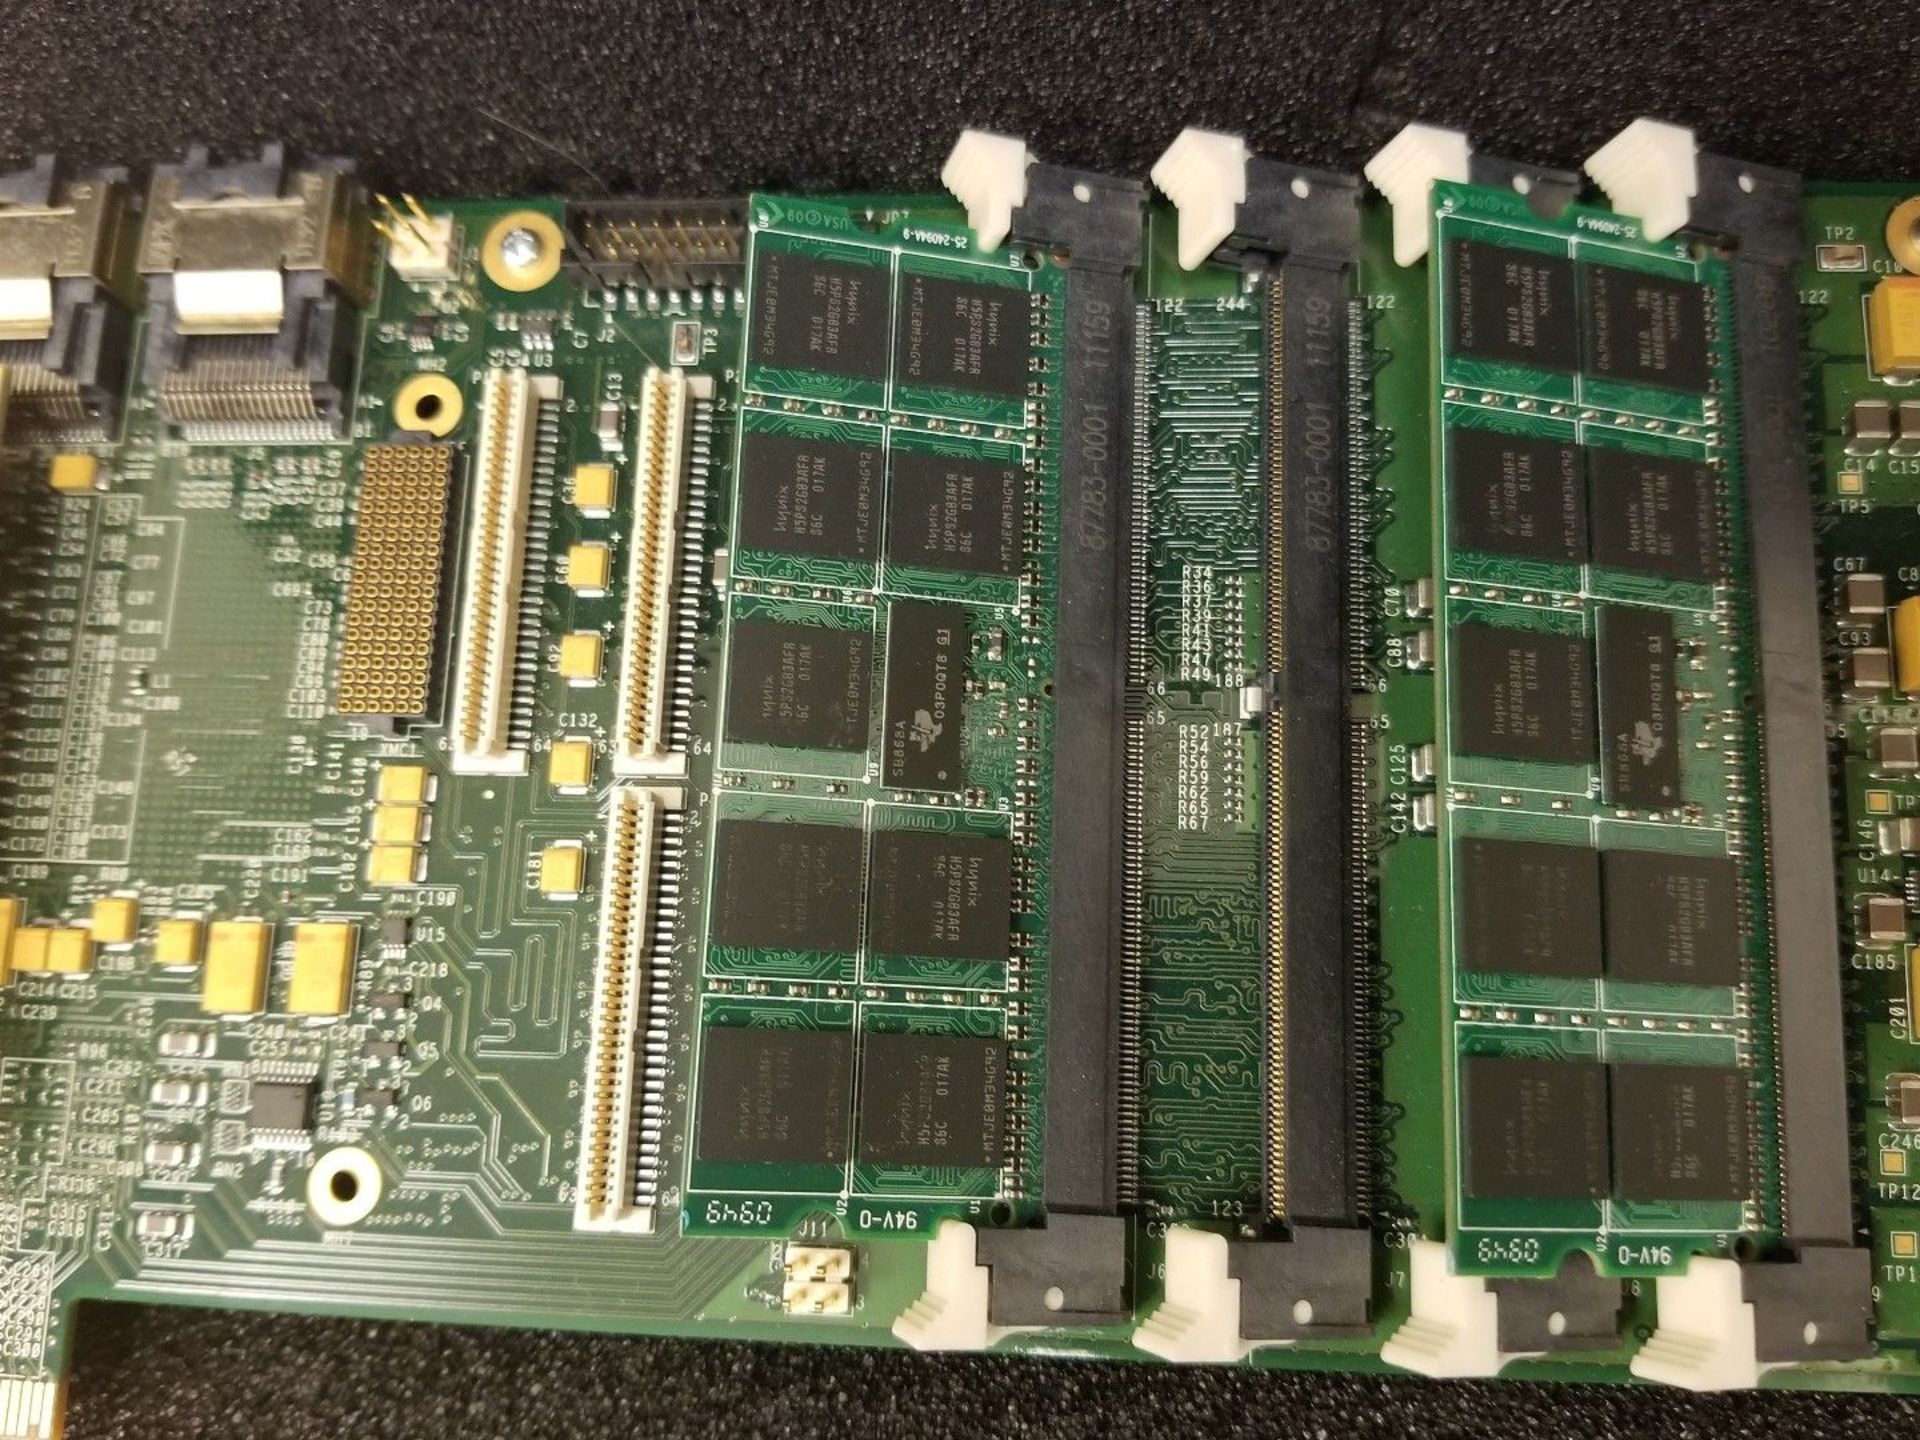 Delphi Engineering Xilinx Virtex FPGA Development Board & FMC Carrier - Image 4 of 6